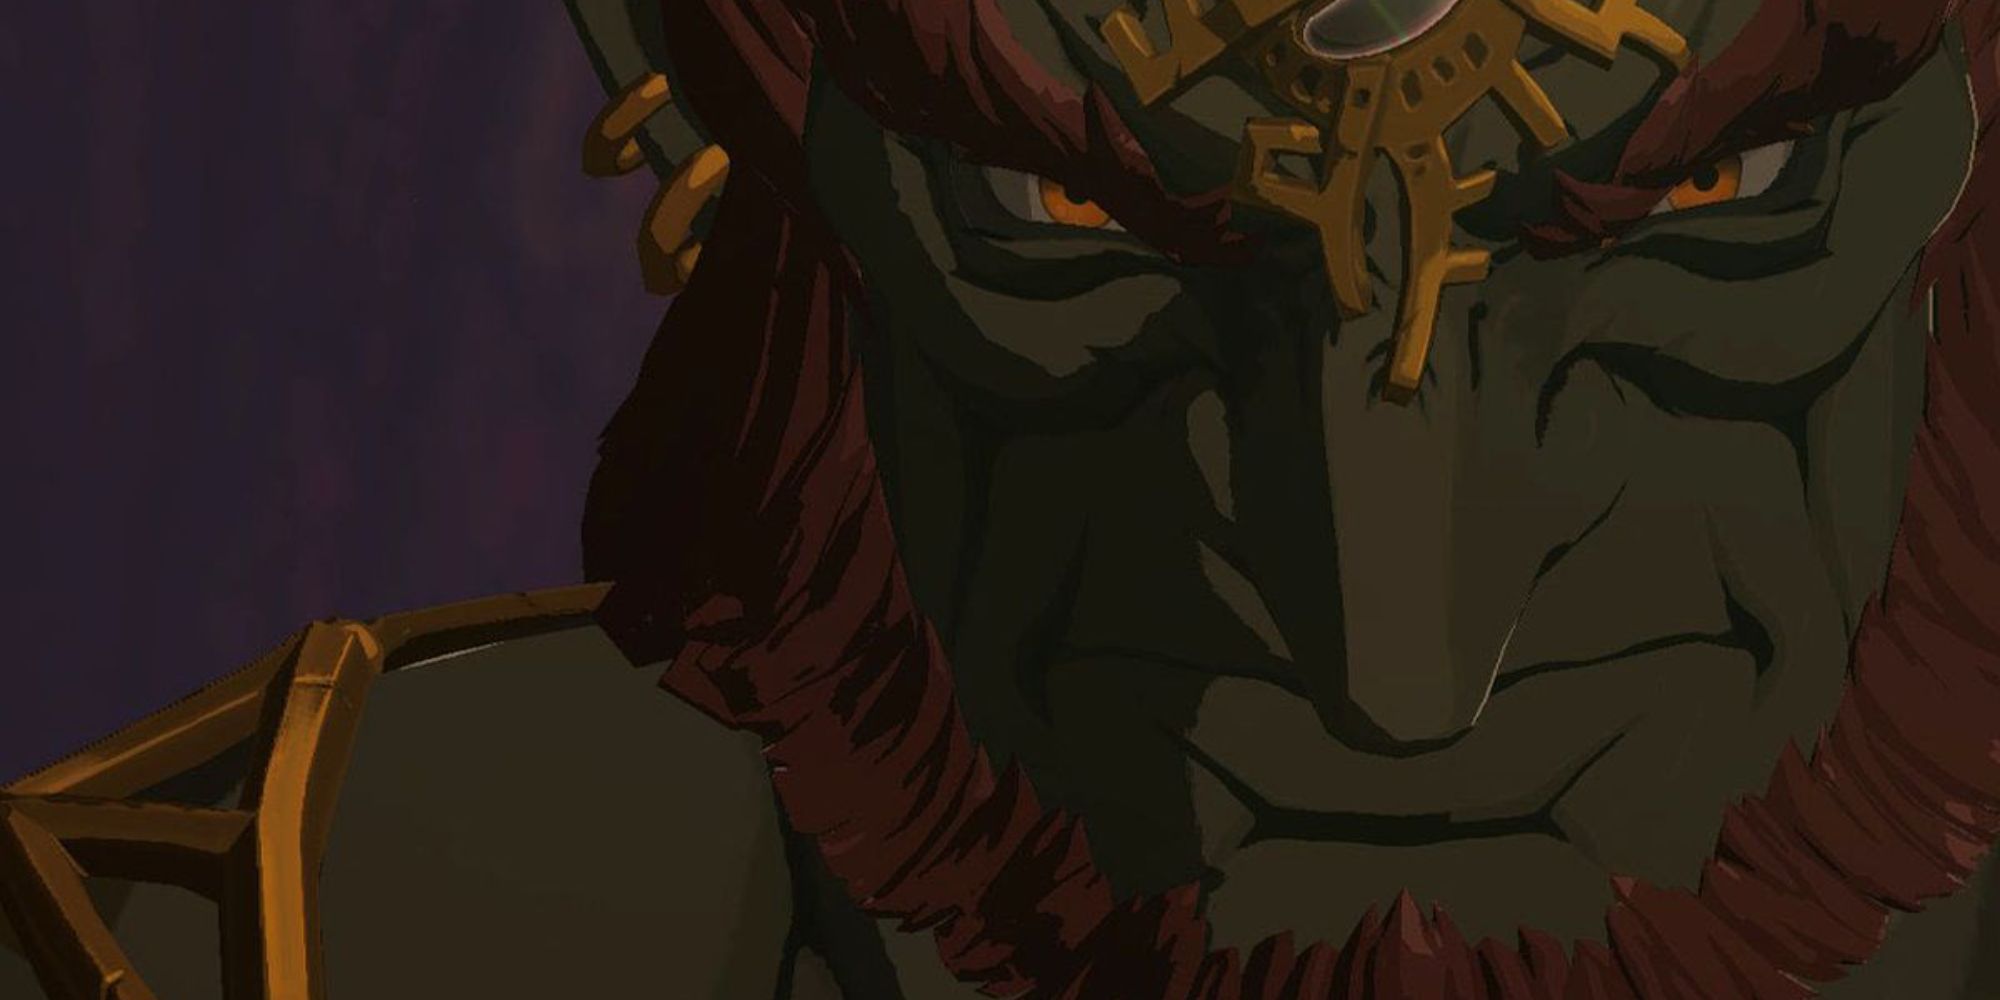 A close-up of Ganondorf's intense look